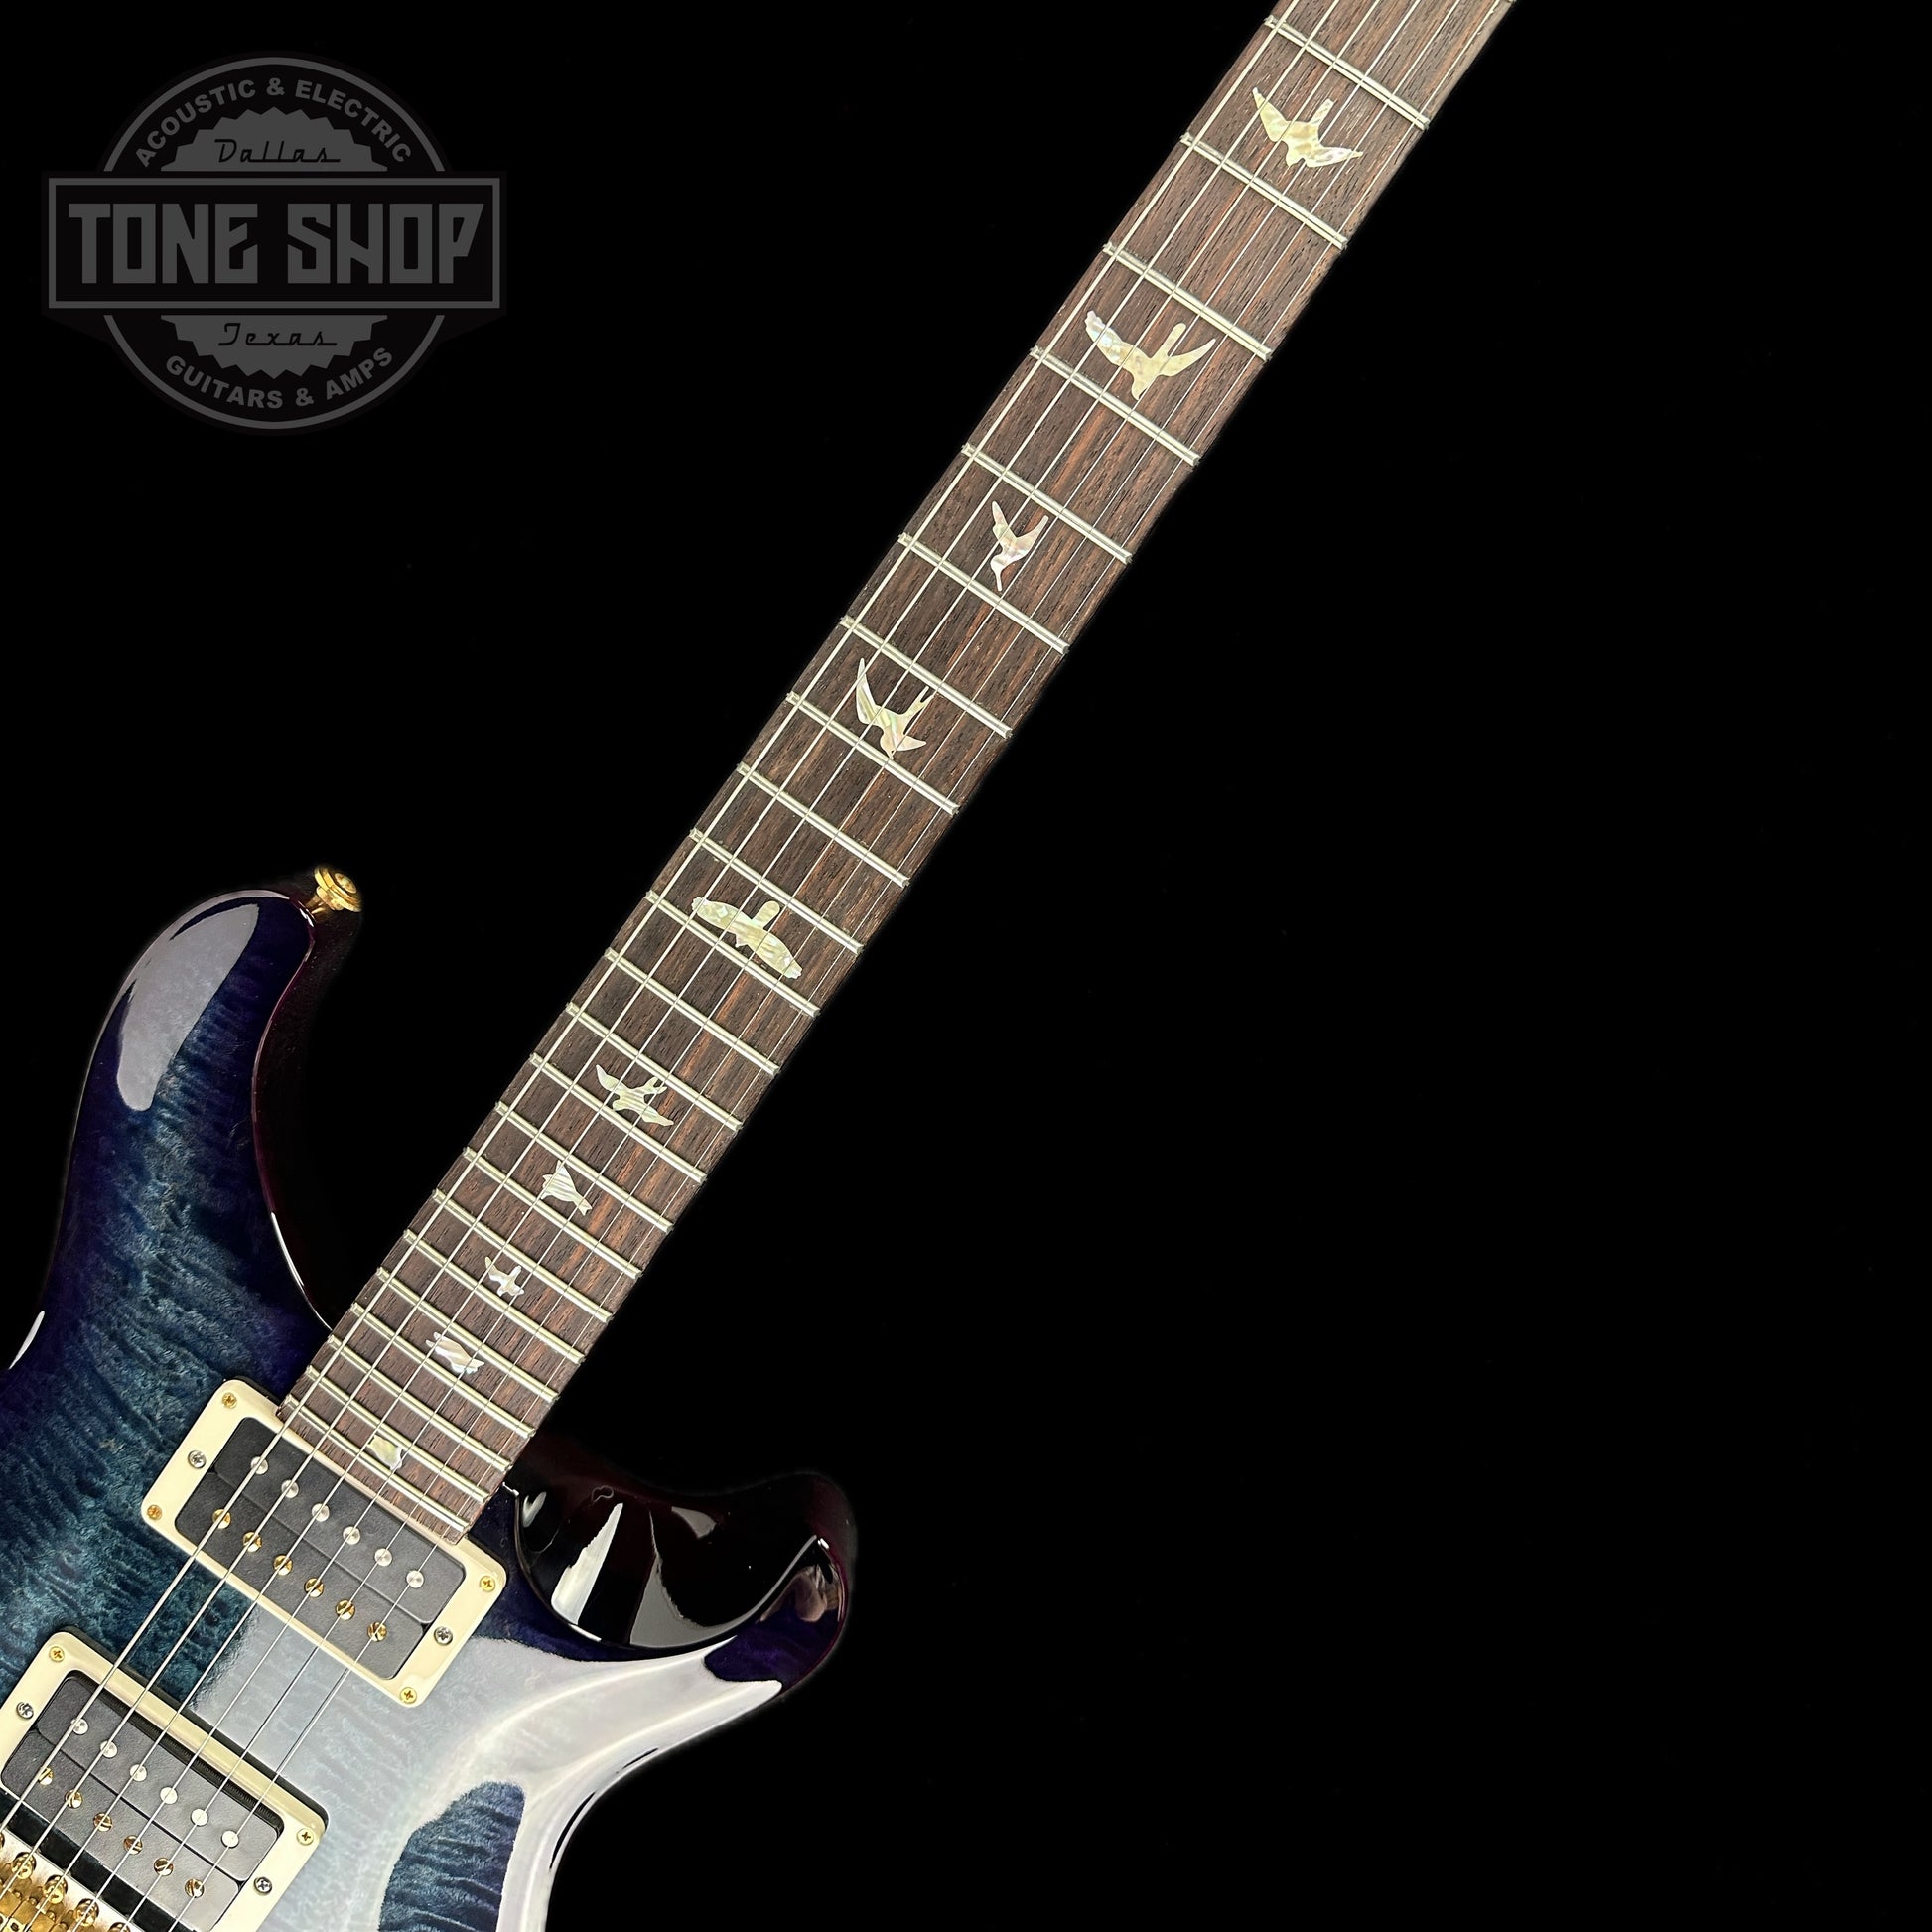 Fretboard of Used PRS Paul's Guitar 35th Anniversary River Blue Smoke Burst.